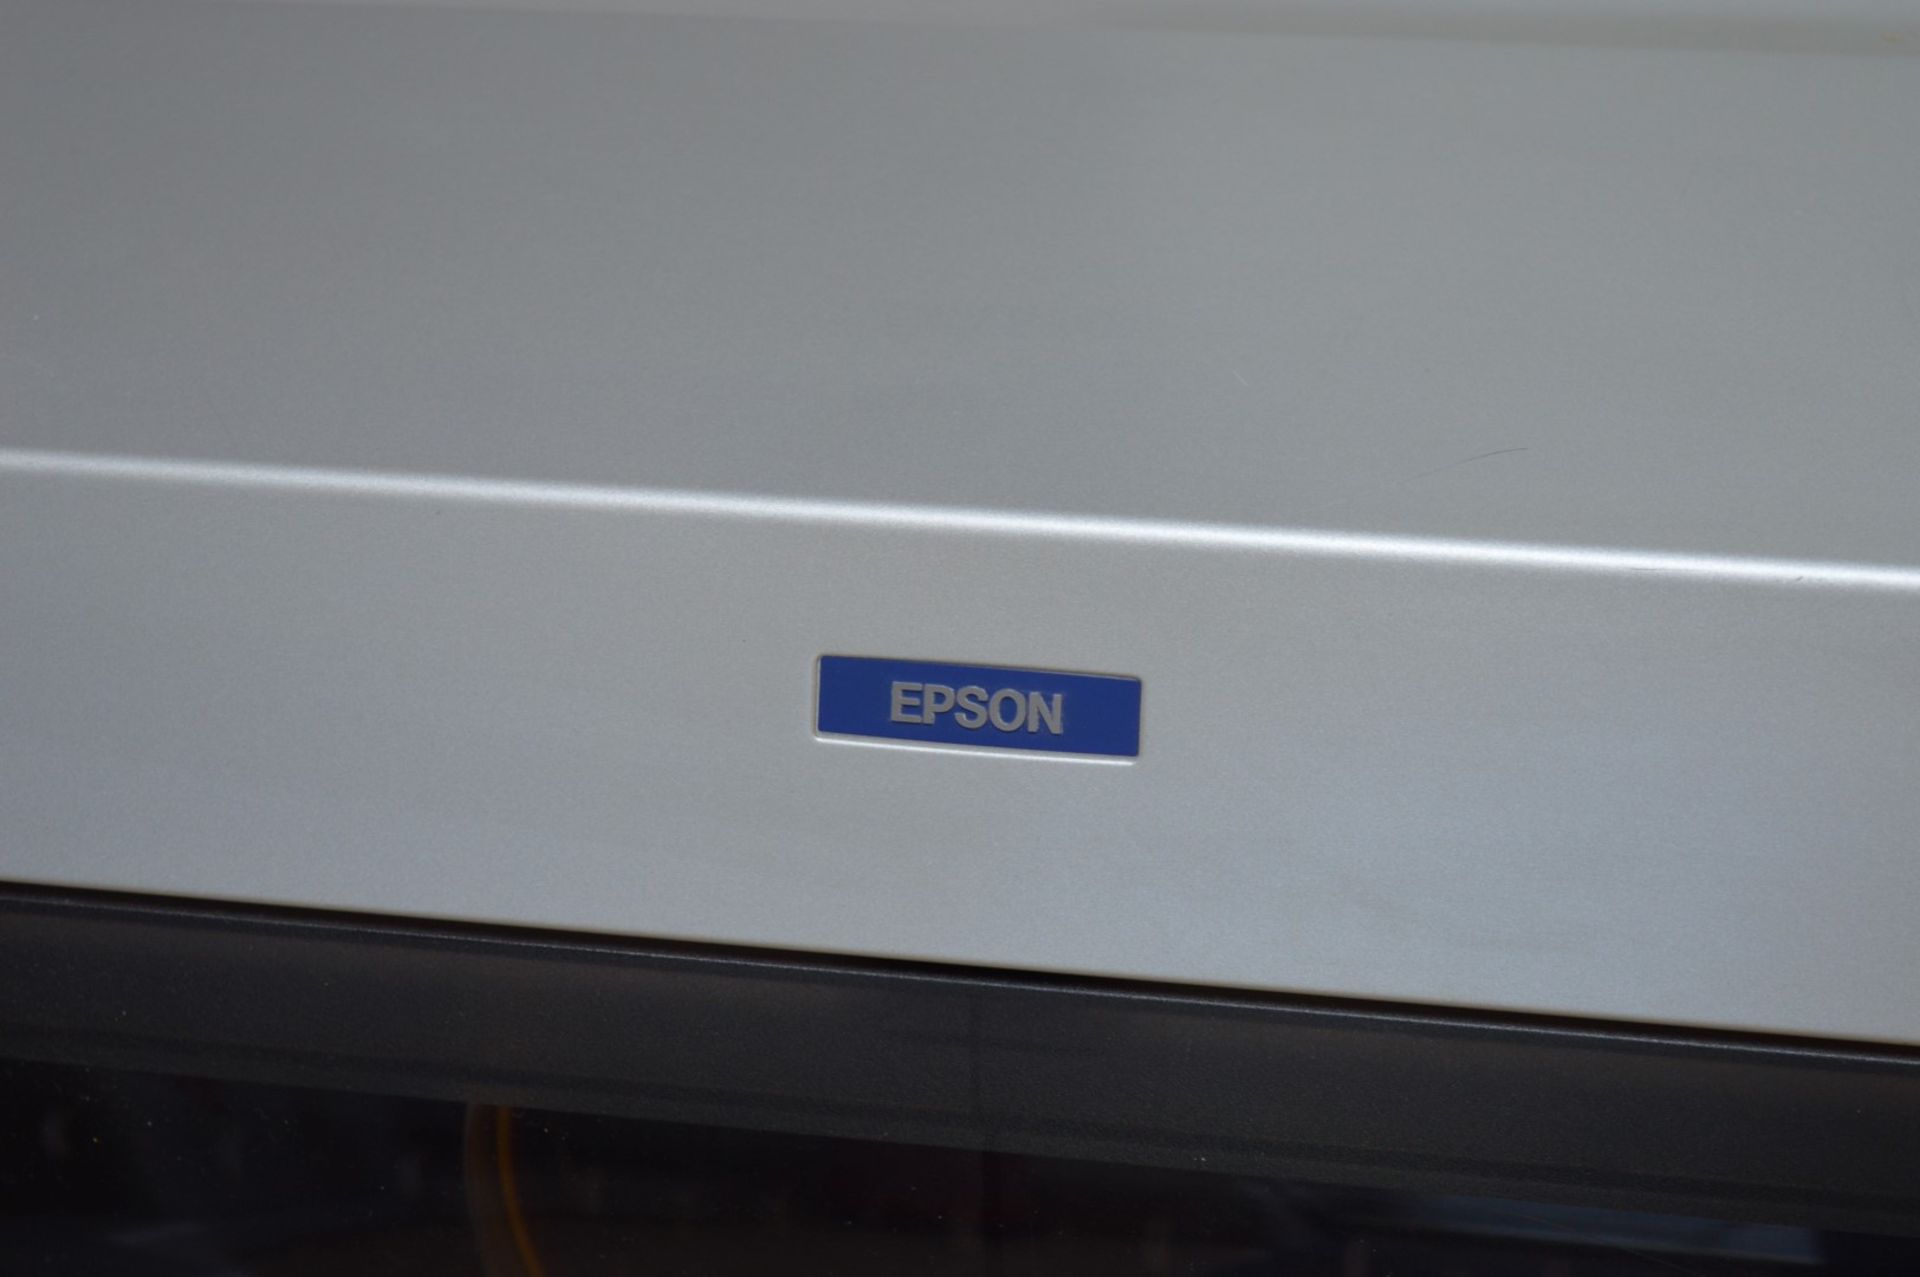 1 x Epson Stylus Pro 10600 44 Inch Large Format Inkjet Plotter Printer - Model P260A - Max - Image 8 of 10